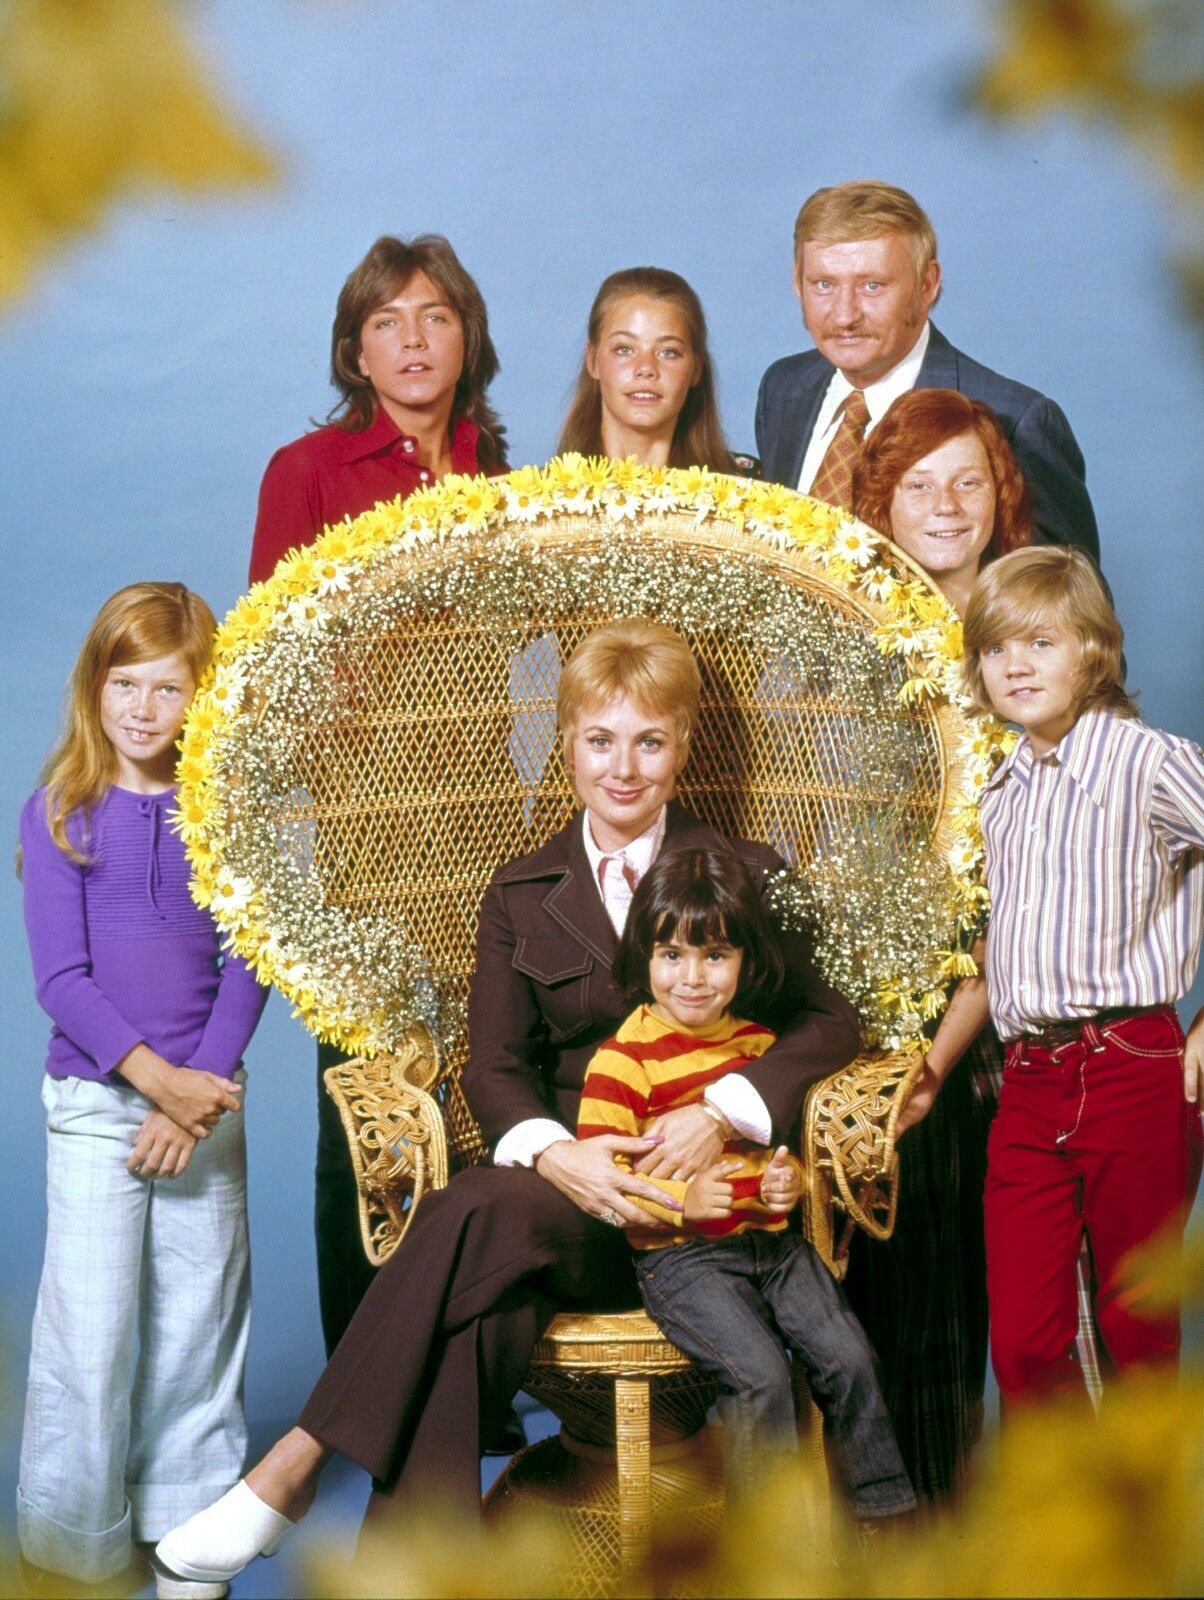 THE PARTRIDGE FAMILY - TV SHOW CAST PHOTO #197 - DAVID CASSIDY